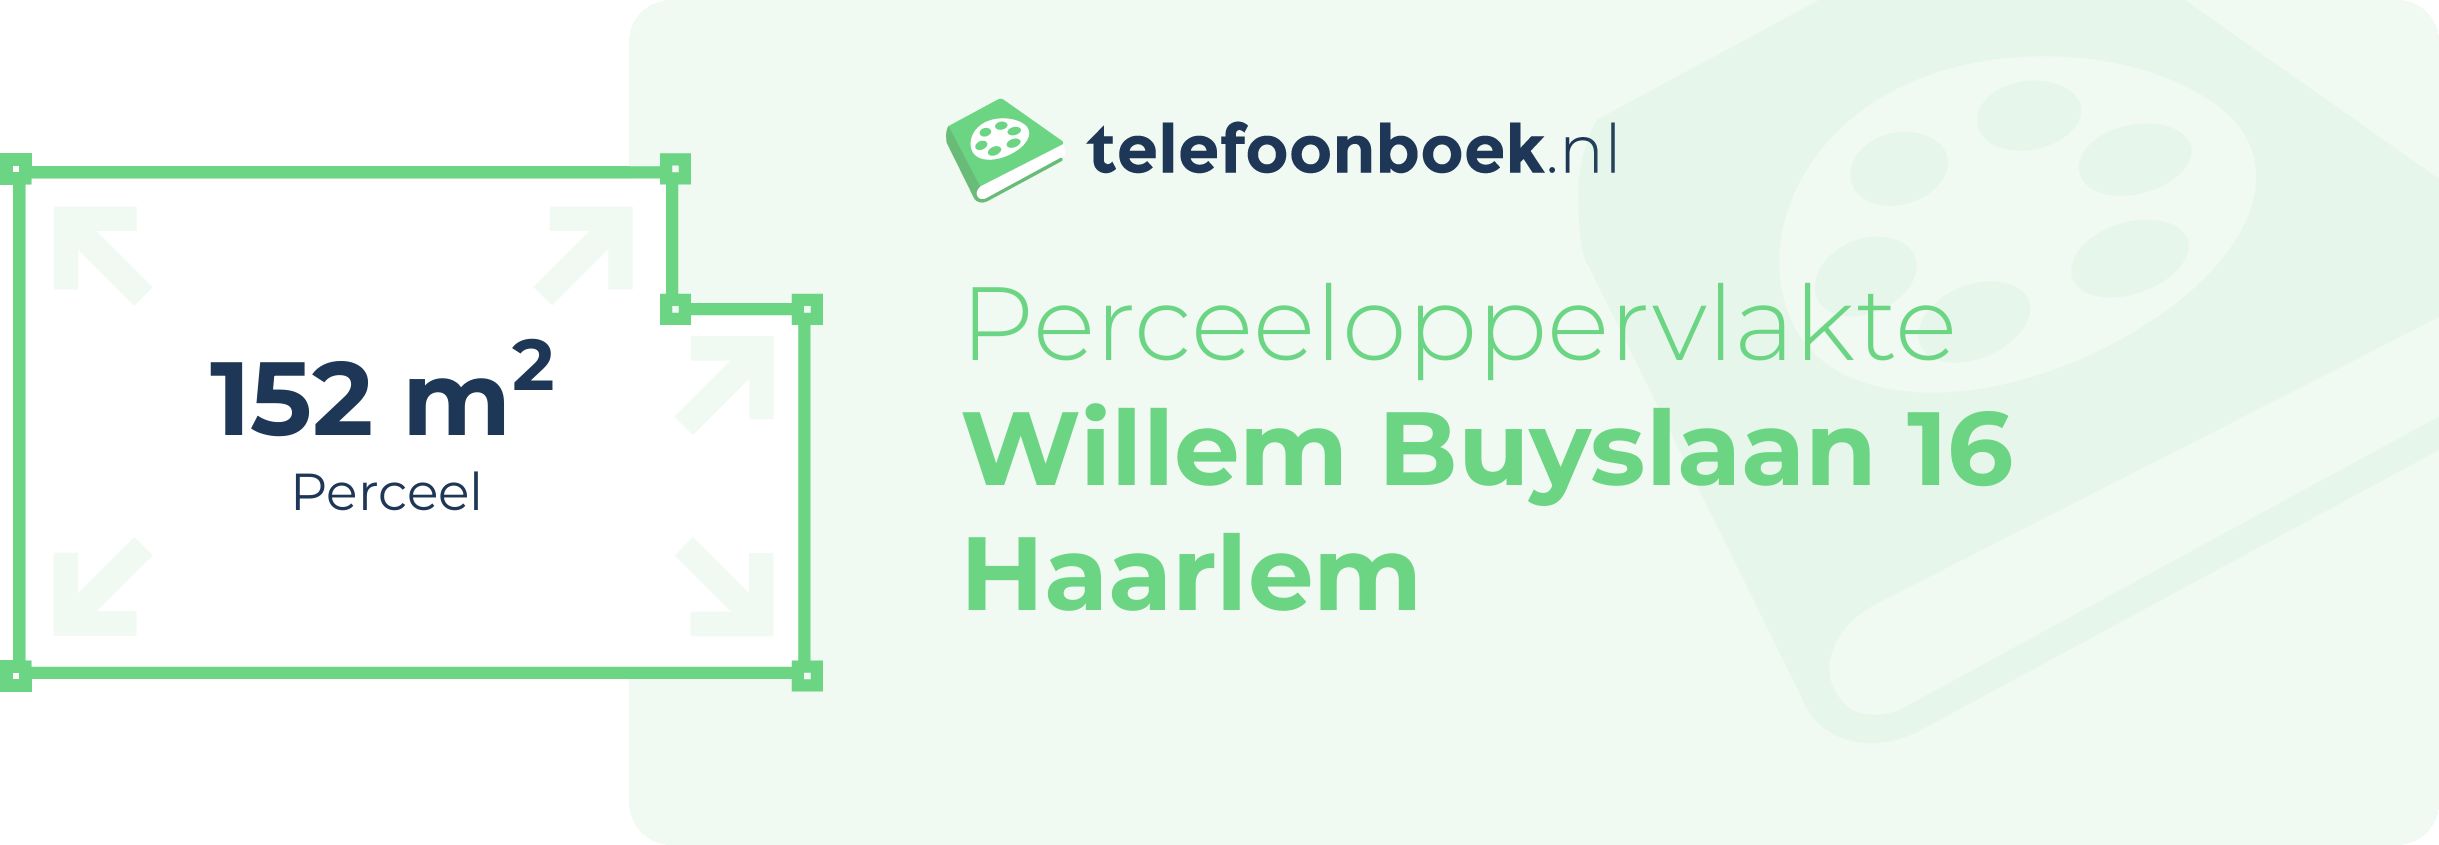 Perceeloppervlakte Willem Buyslaan 16 Haarlem